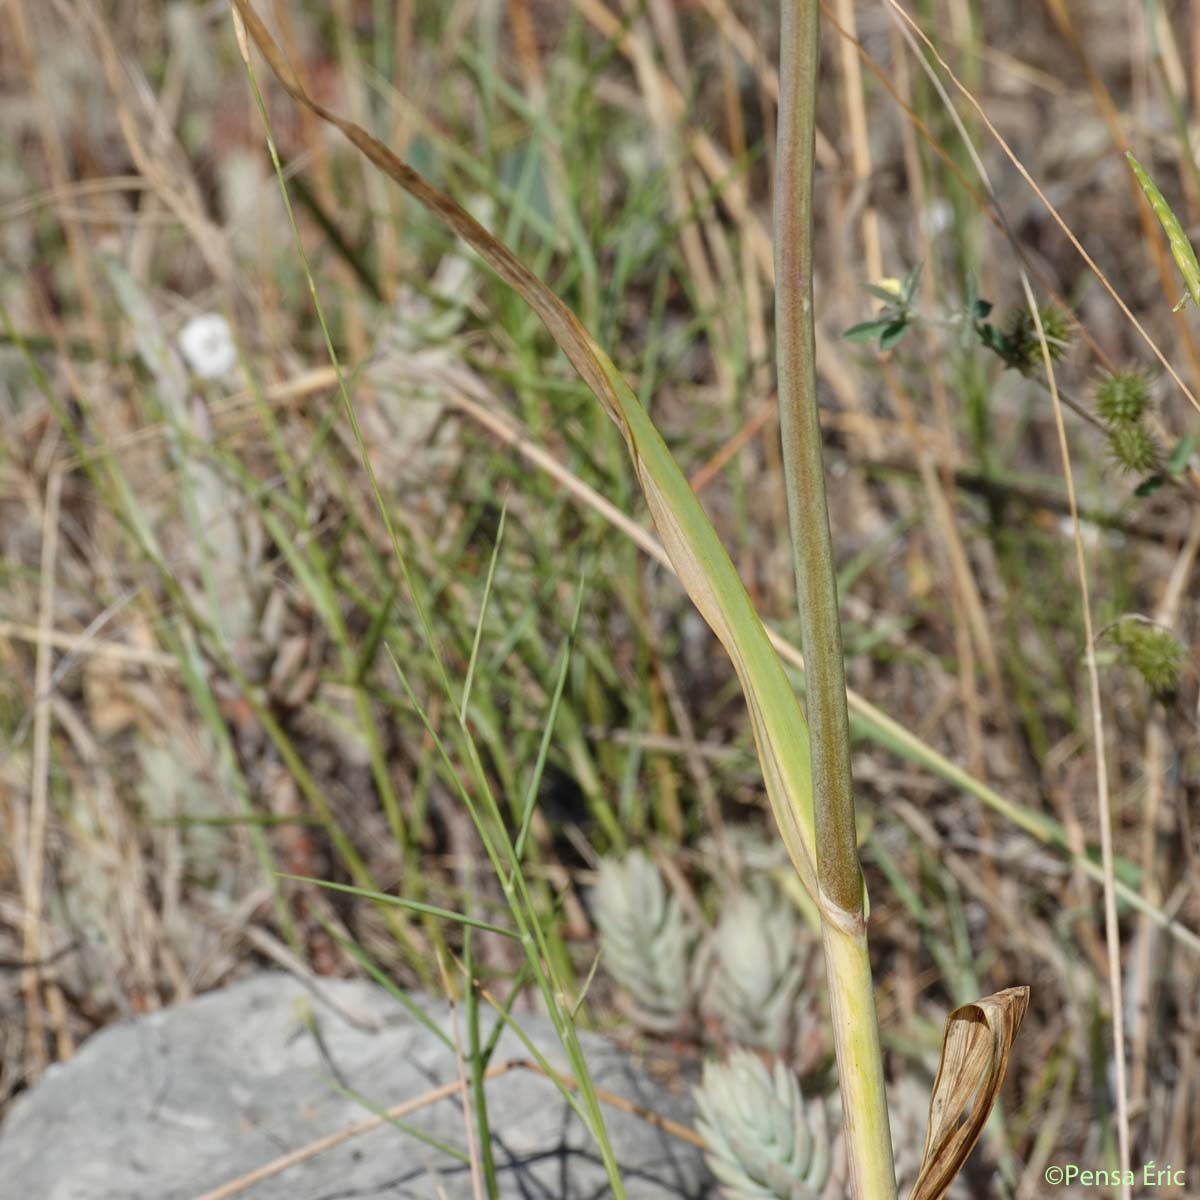 Ail Faux-Poireau - Allium ampeloprasum